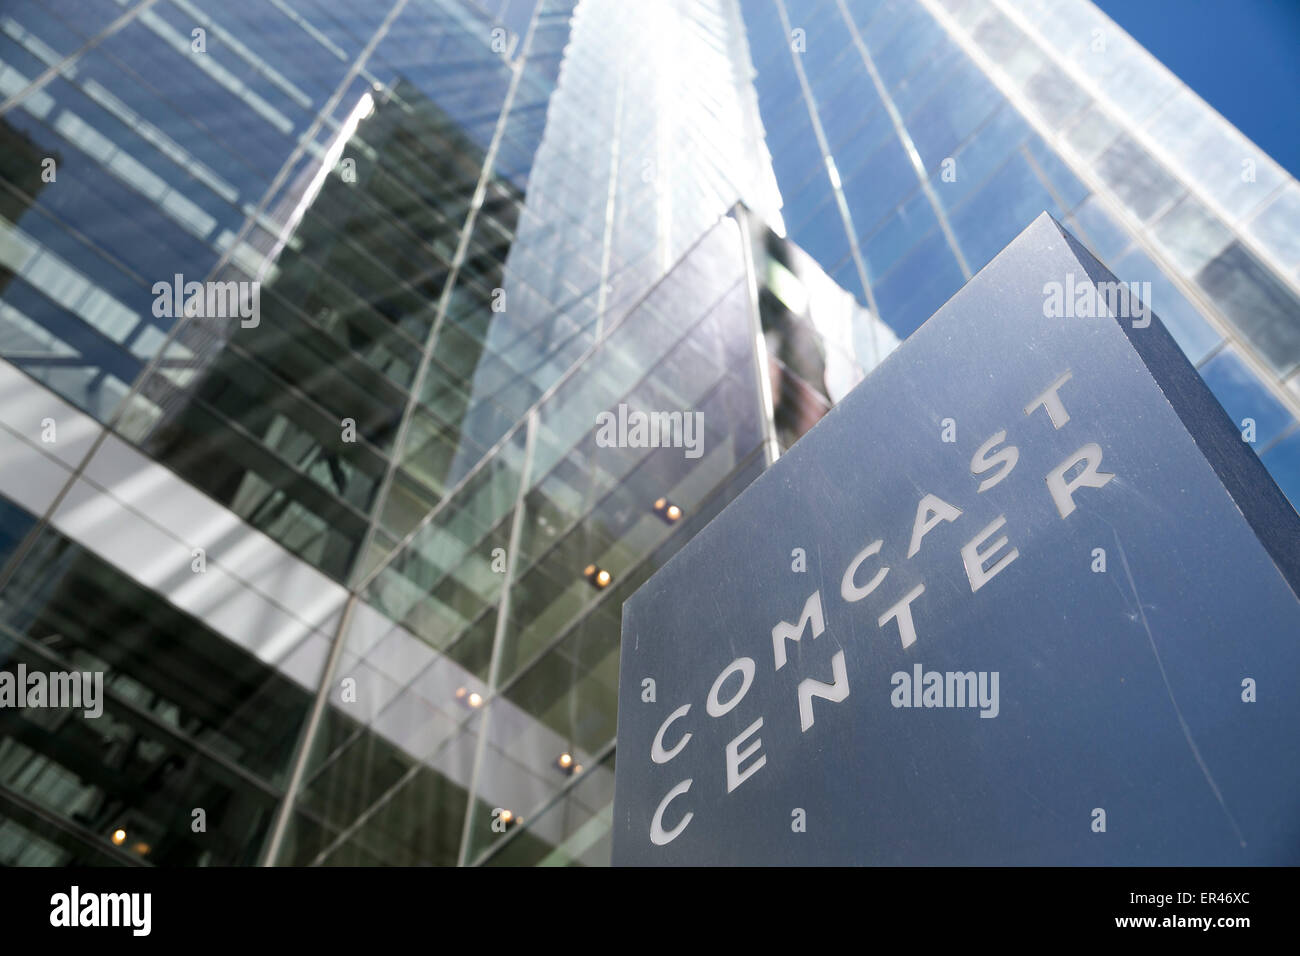 The headquarters of the Comcast Corporation in downtown Philadelphia, Pennsylvania. Stock Photo